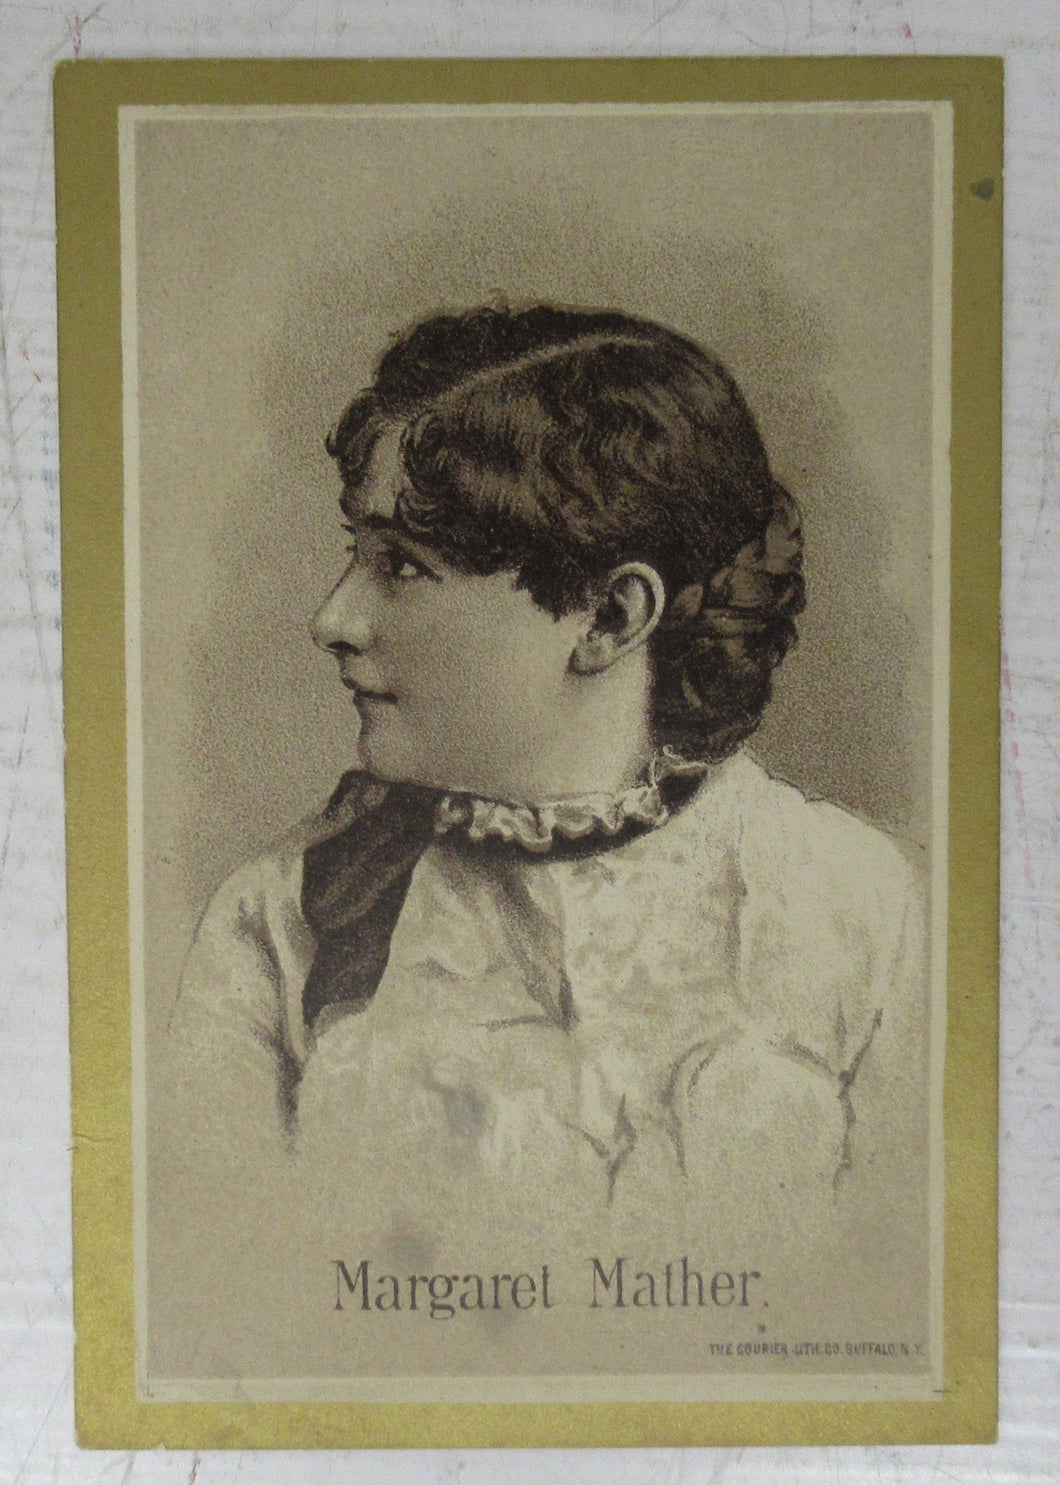 Portrait card of Margaret Mather